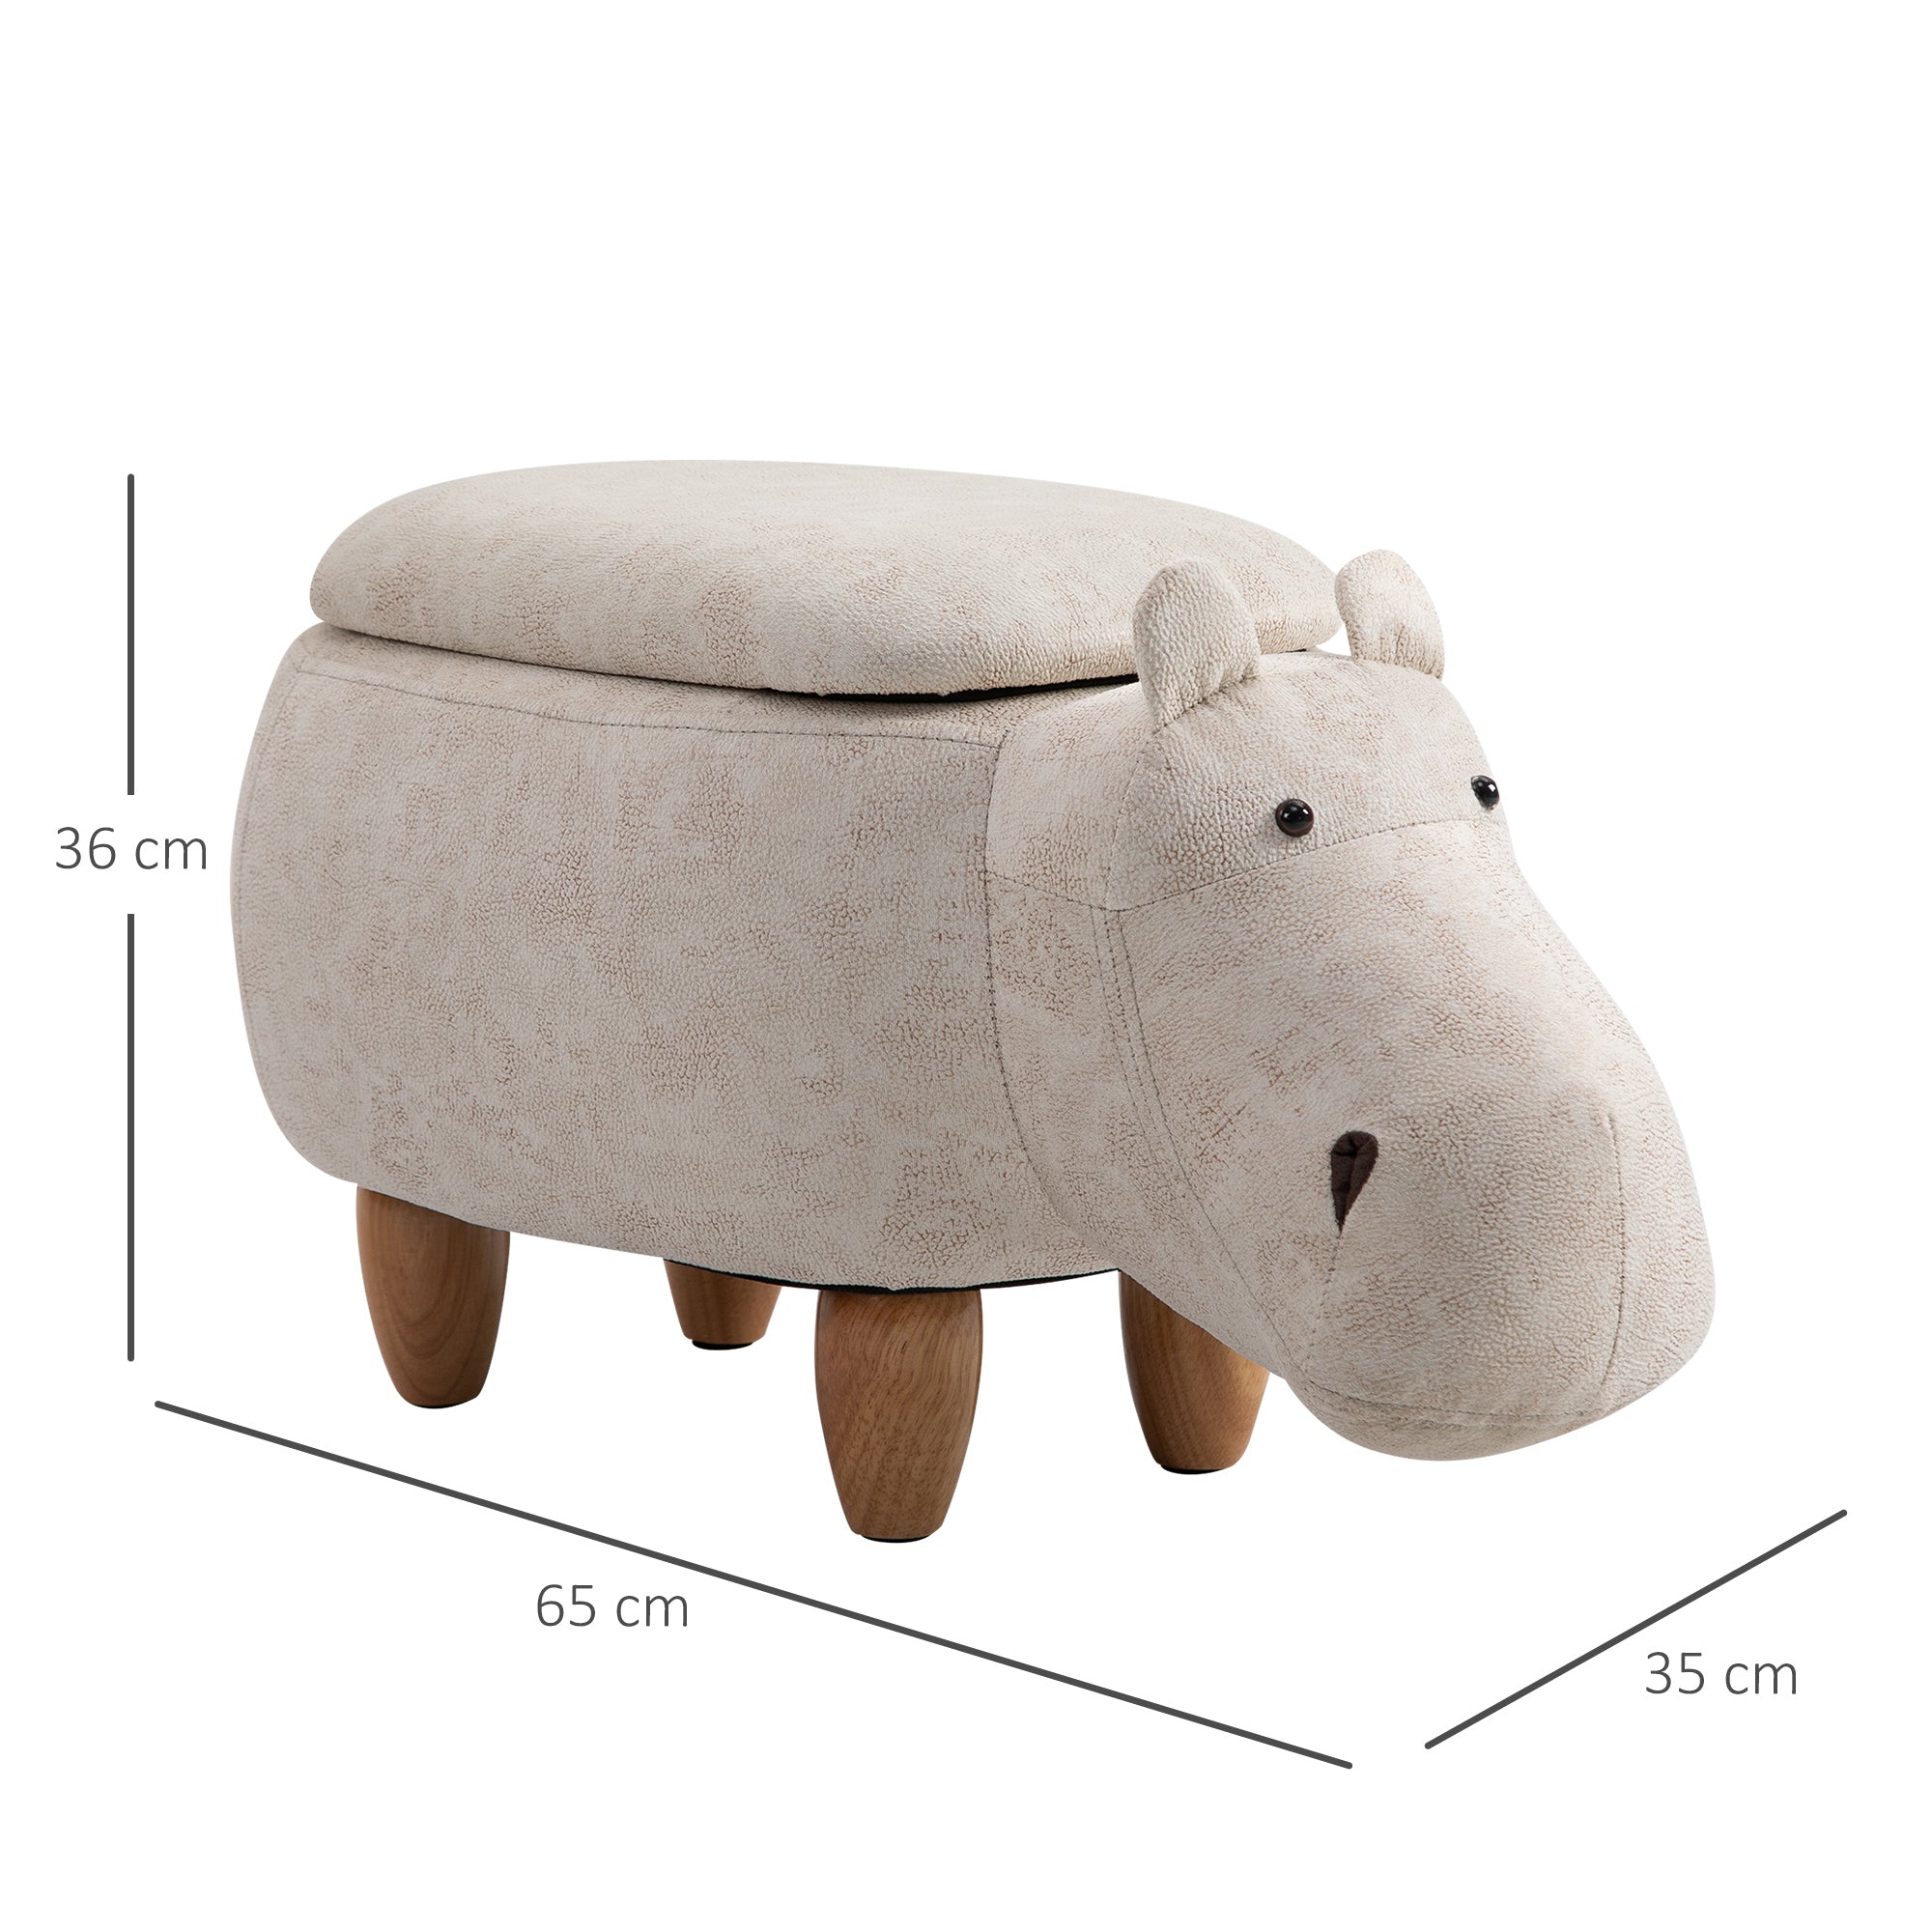 Hippo Storage Stool Cute Decoration Footrest Wood Frame Legs with Padding Lid Ottoman Animal Furniture Cream 36 x 65cm-2